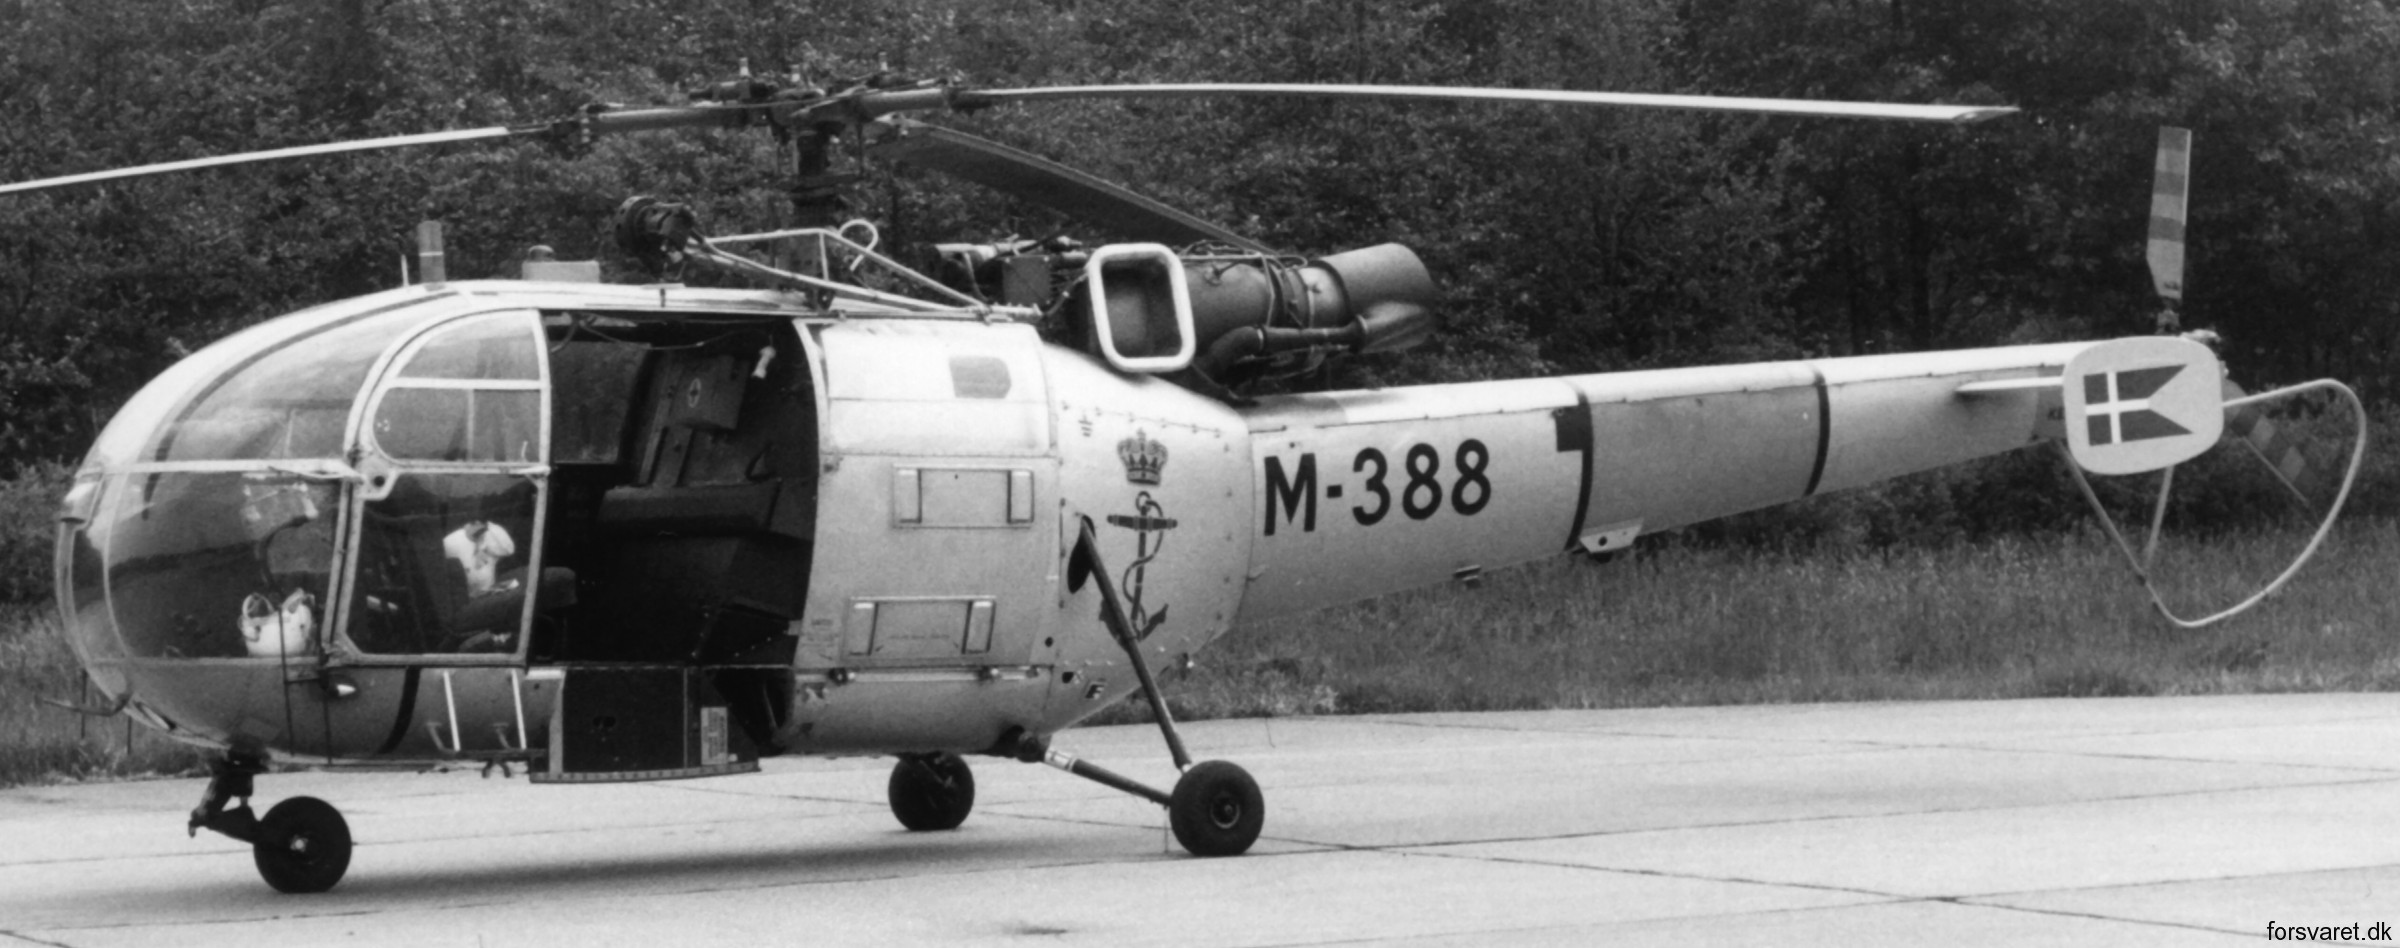 sa 316b alouette iii helicopter royal danish navy søværnet kongelige danske marine sud aviation m-388 06